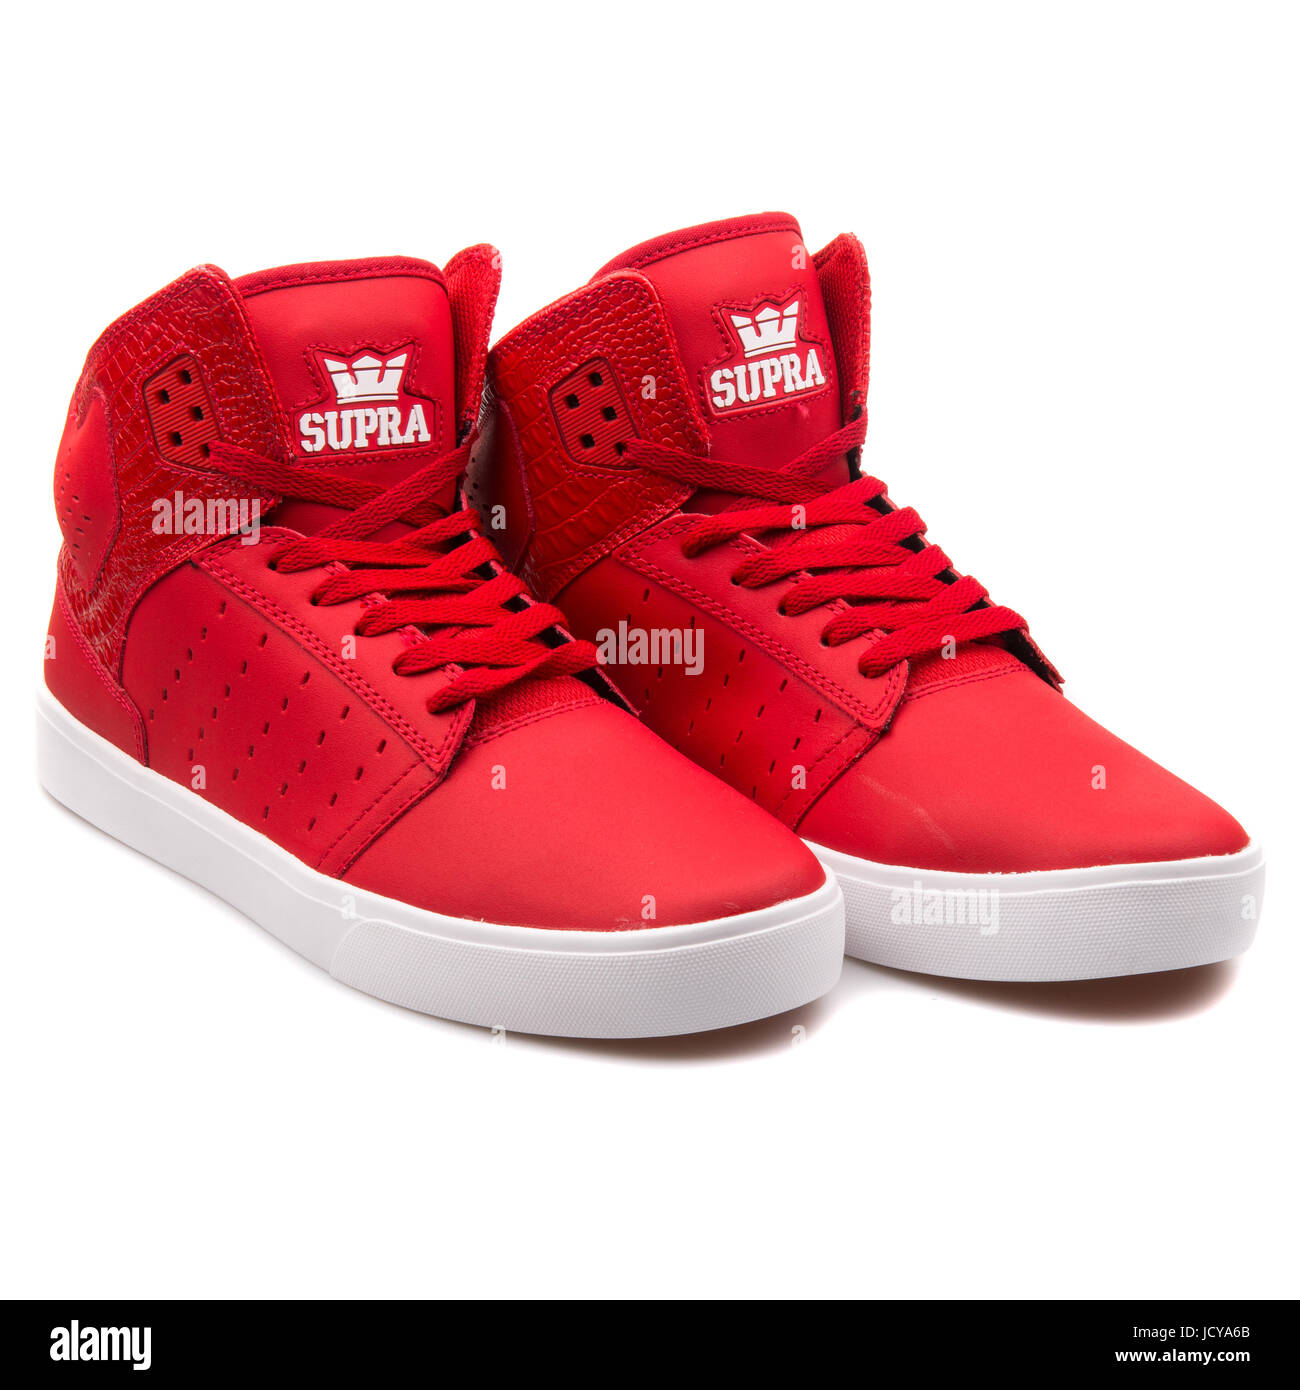 Supra Atom Kardinal-Off rot weiße Männer-sportliche Schuhe - S91021  Stockfotografie - Alamy